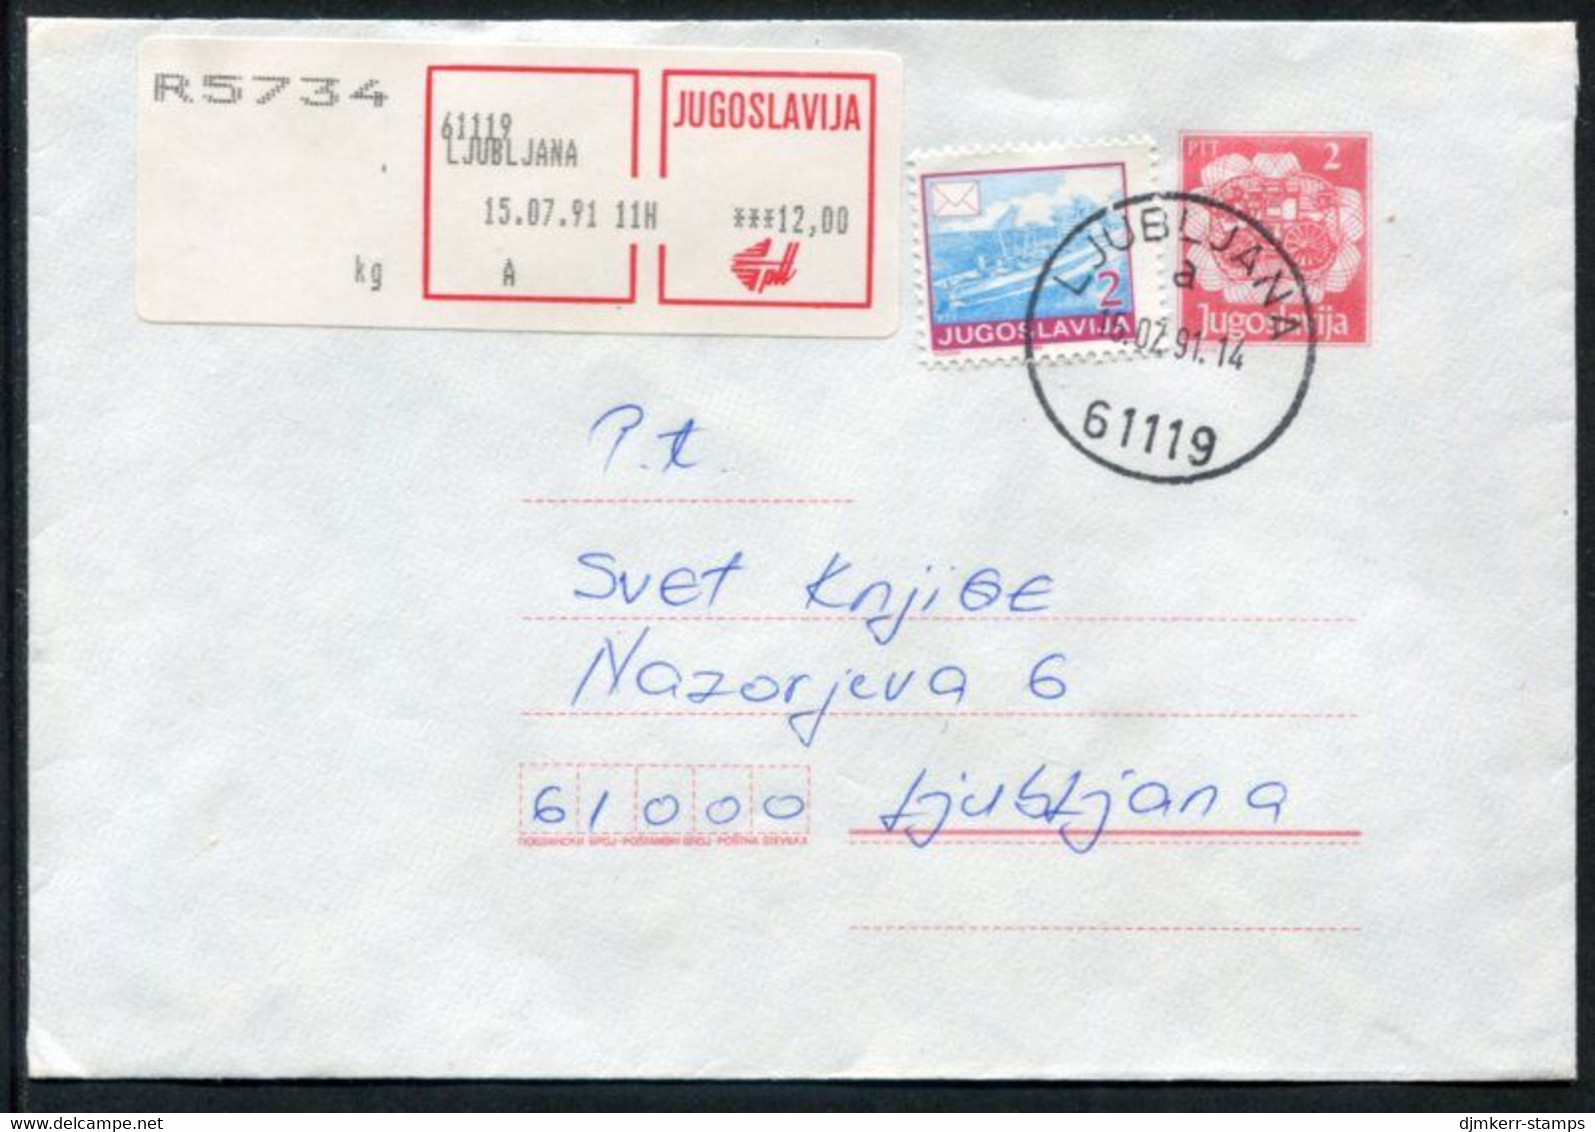 YUGOSLAVIA 1990 Mailcoach 2 D. Stationery Envelope Registered With Additional Franking.  Michel U96 - Ganzsachen